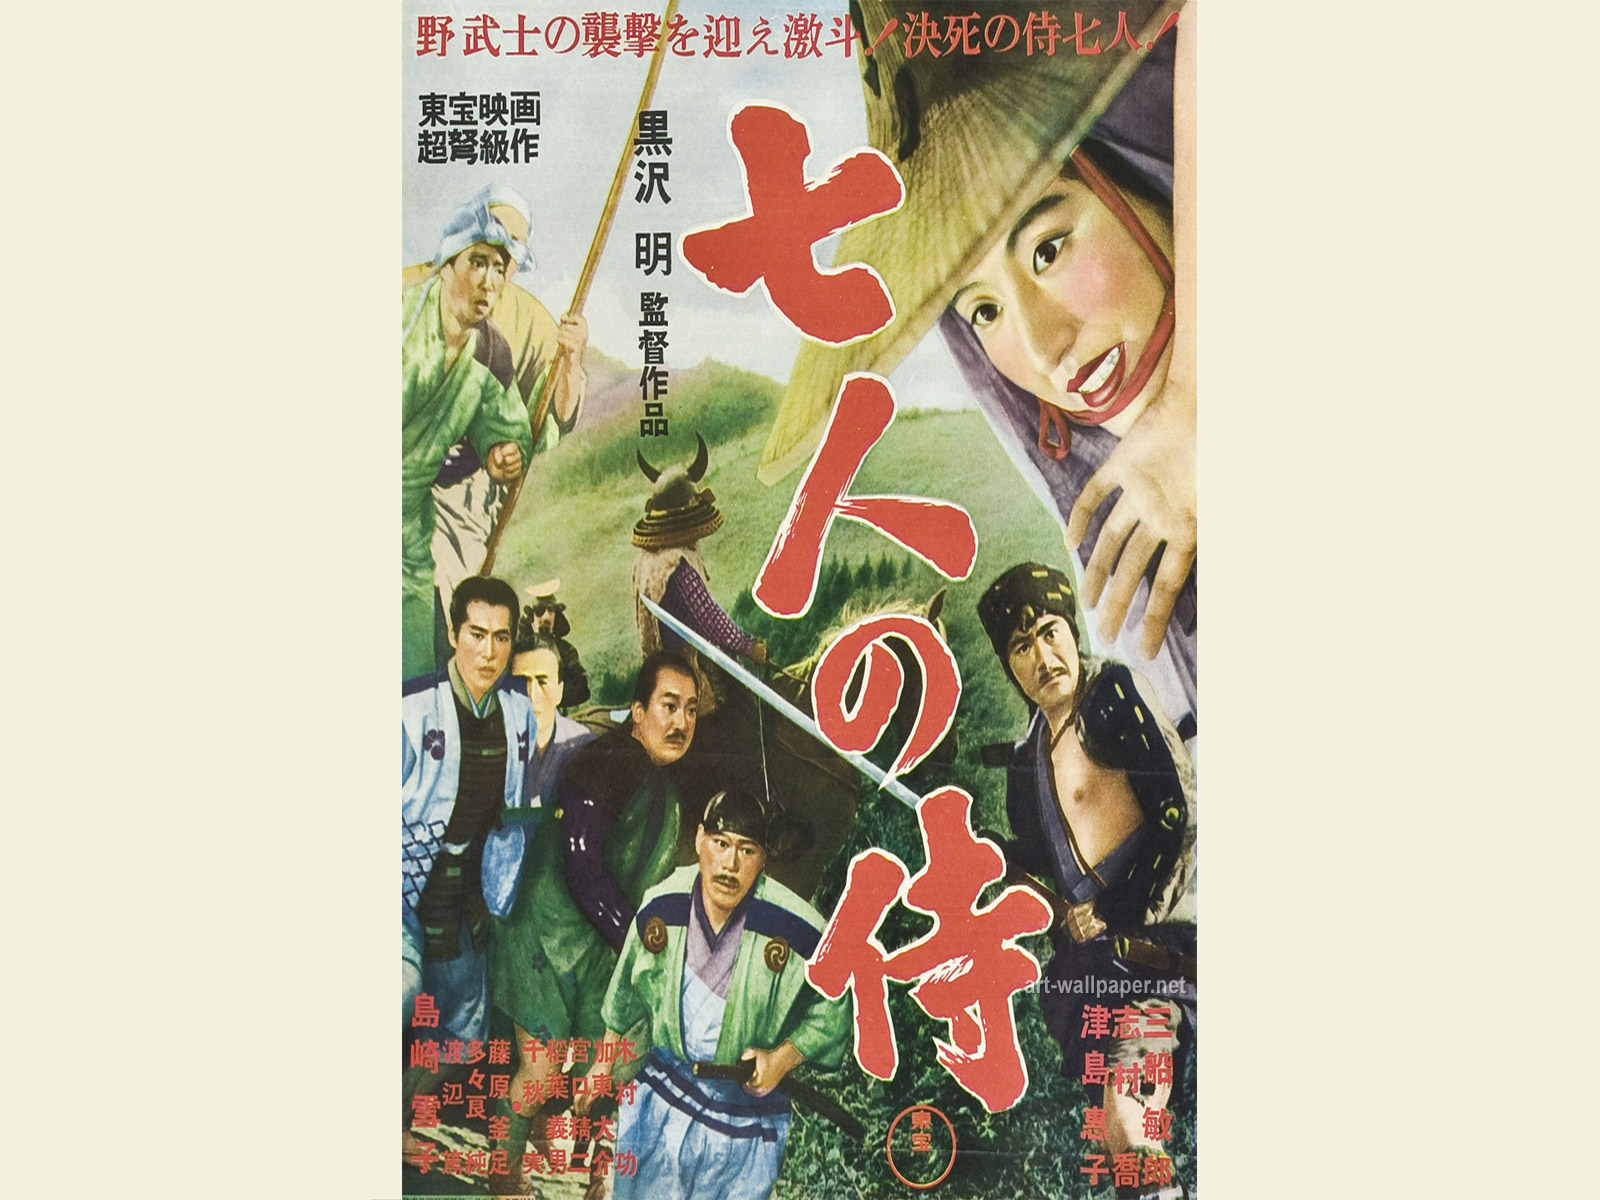 Seven Samurai Wallpaper Poster Movie Desktop